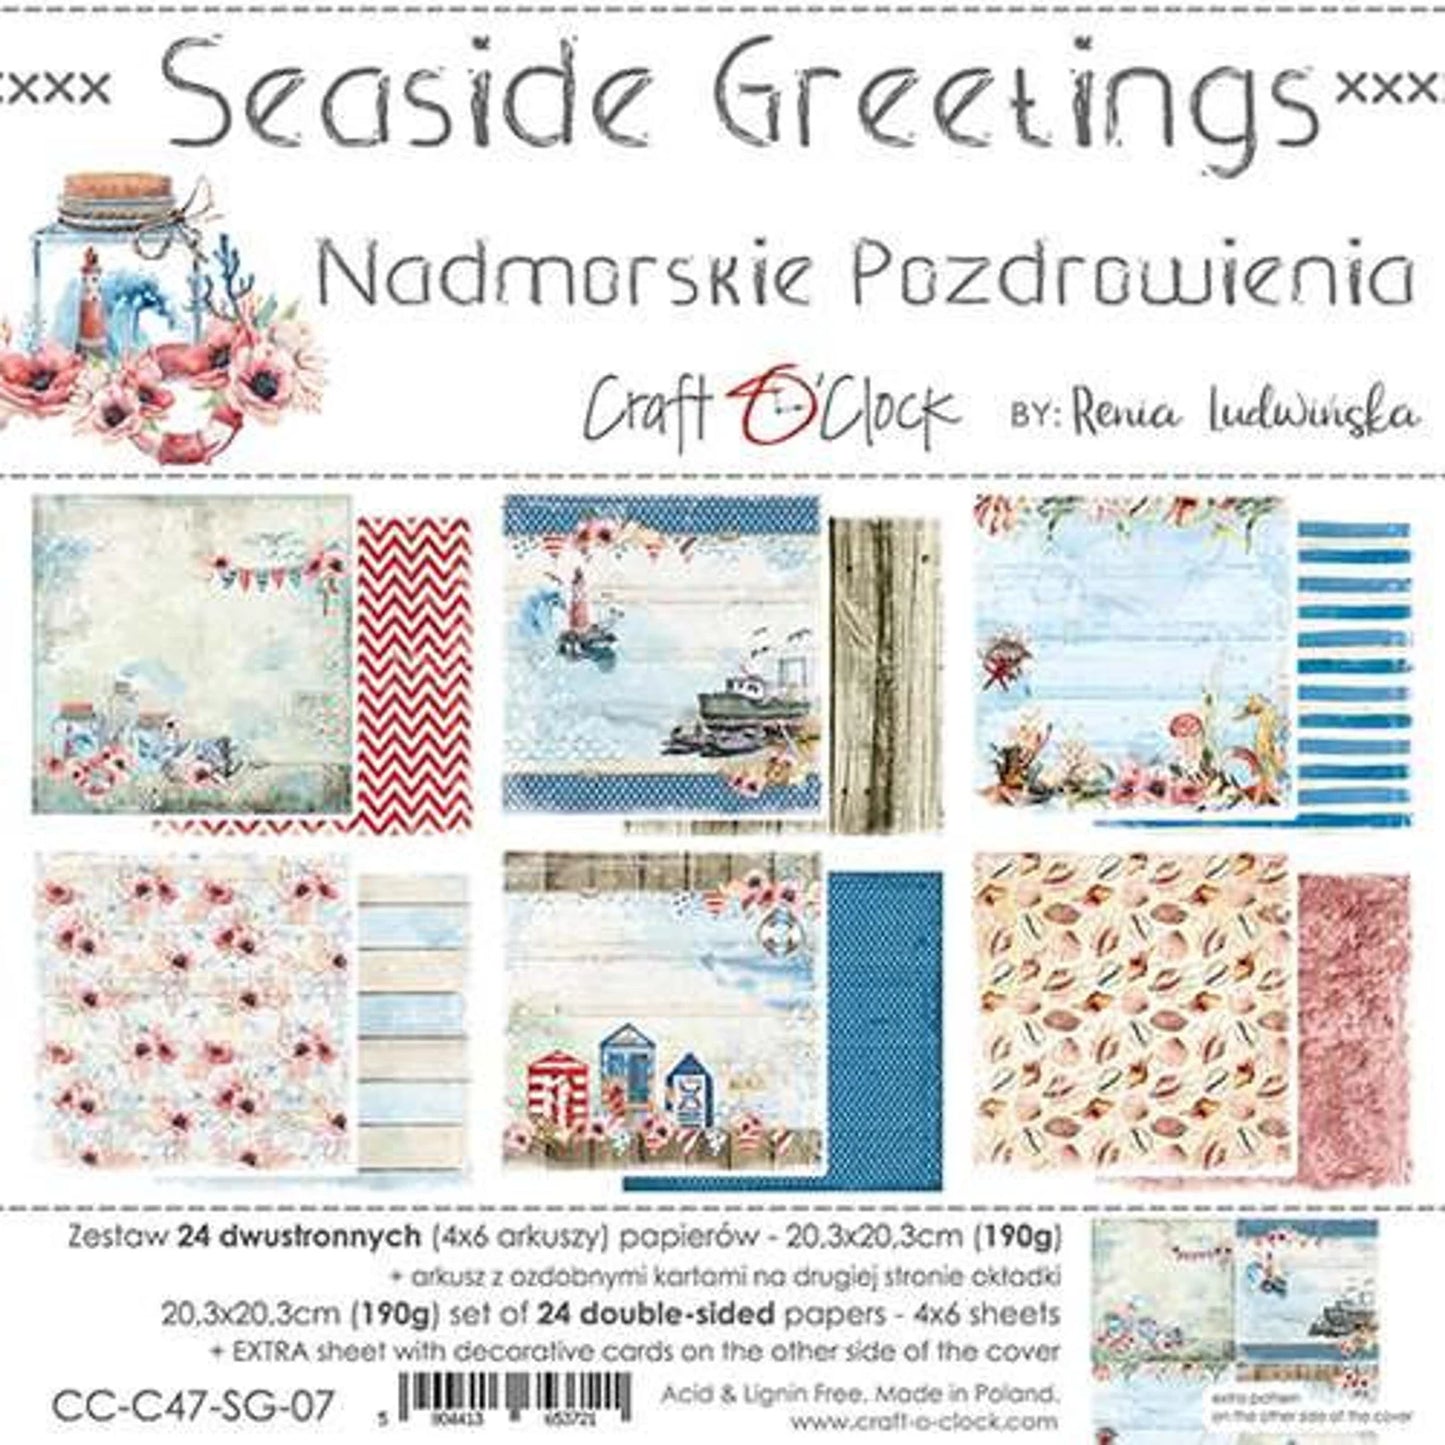 Craft o' Clock Seaside greetings paperset